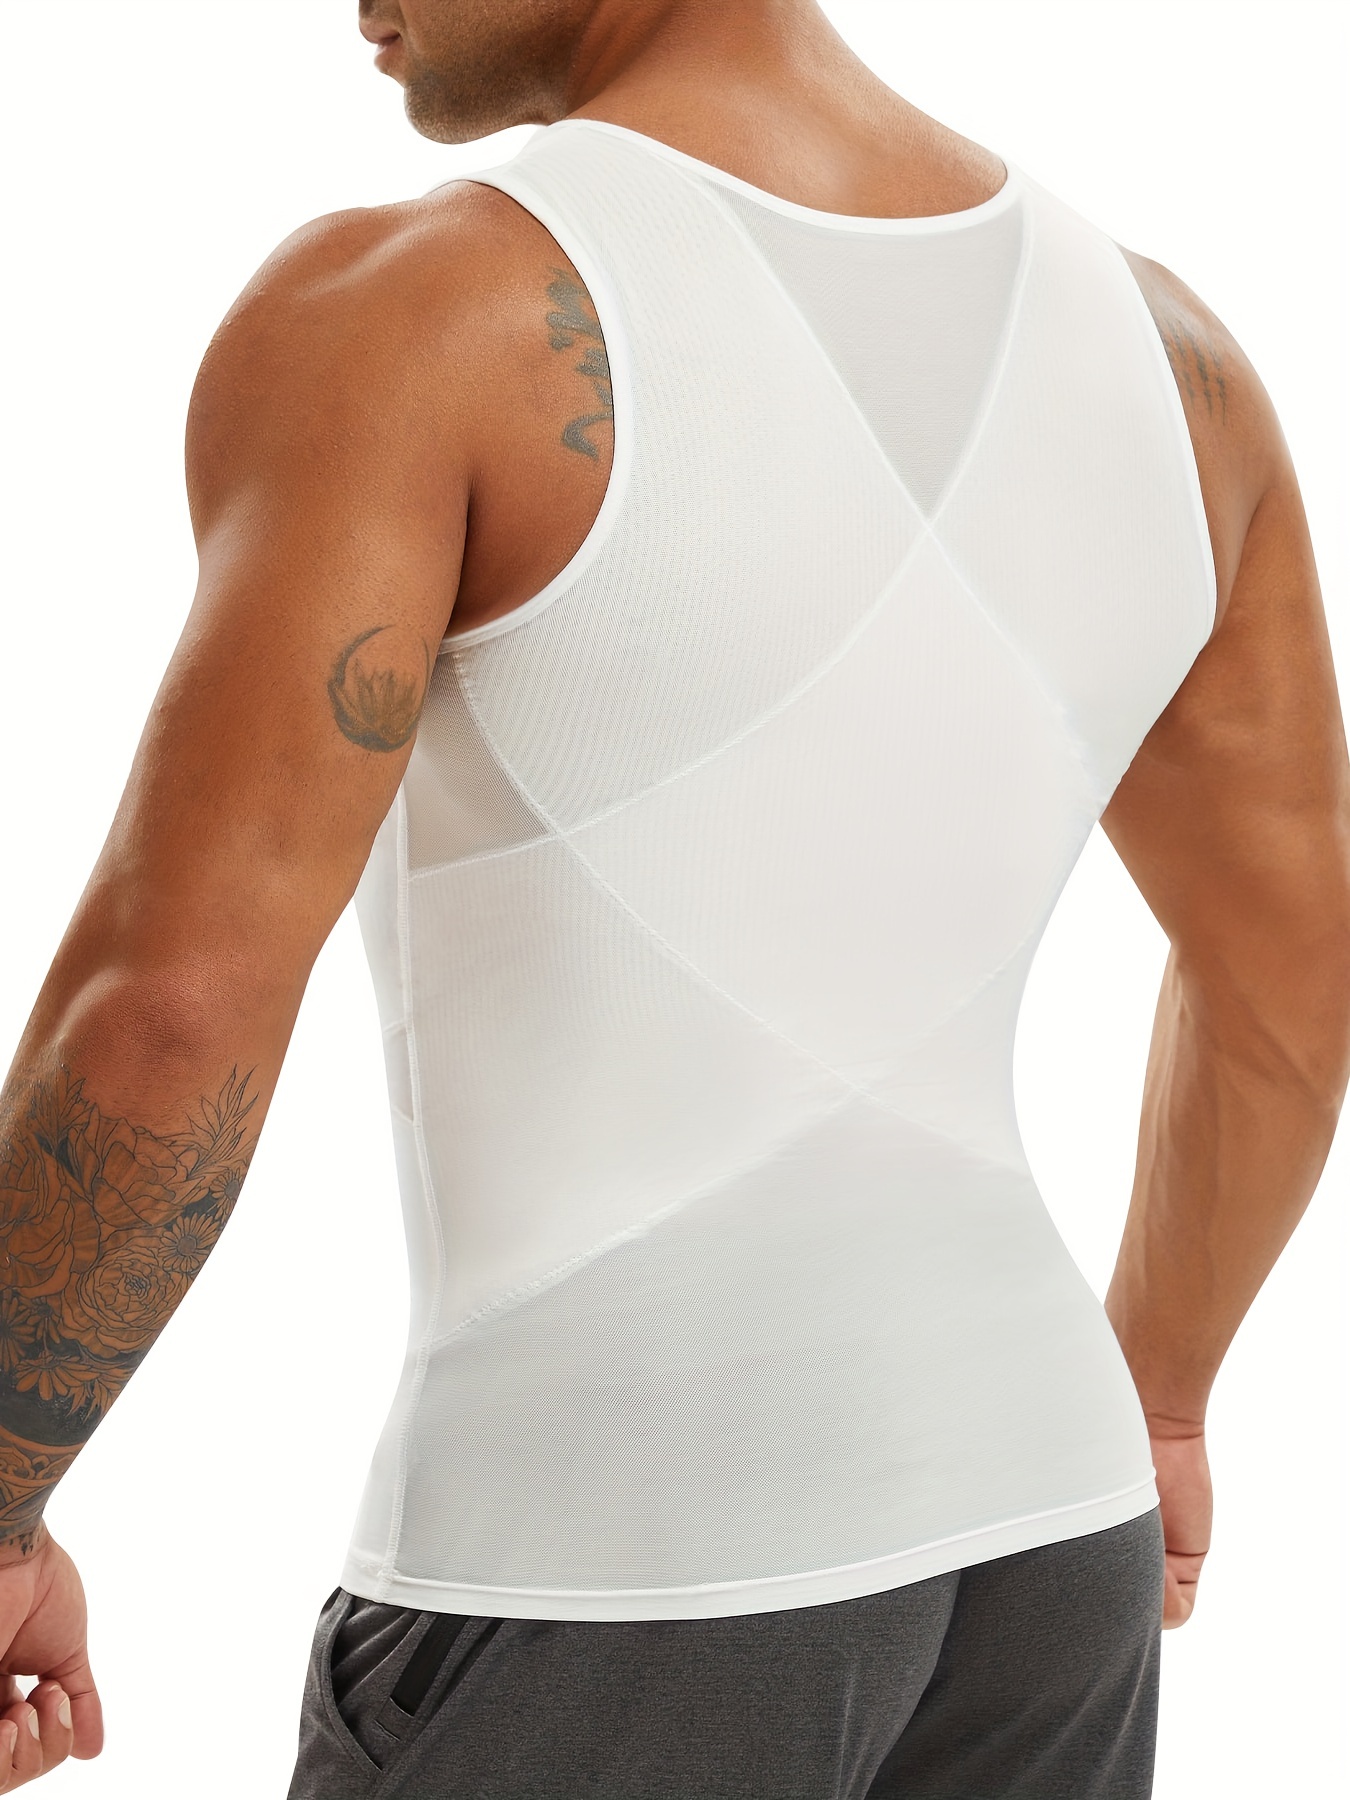 MOLUTAN Mens Compression Shirt Belly Slimming Body Shaper Vest Sleeveless  Zipper Undershirt Tank Top Shapewear for Stomach, Beige, XL price in UAE,  UAE